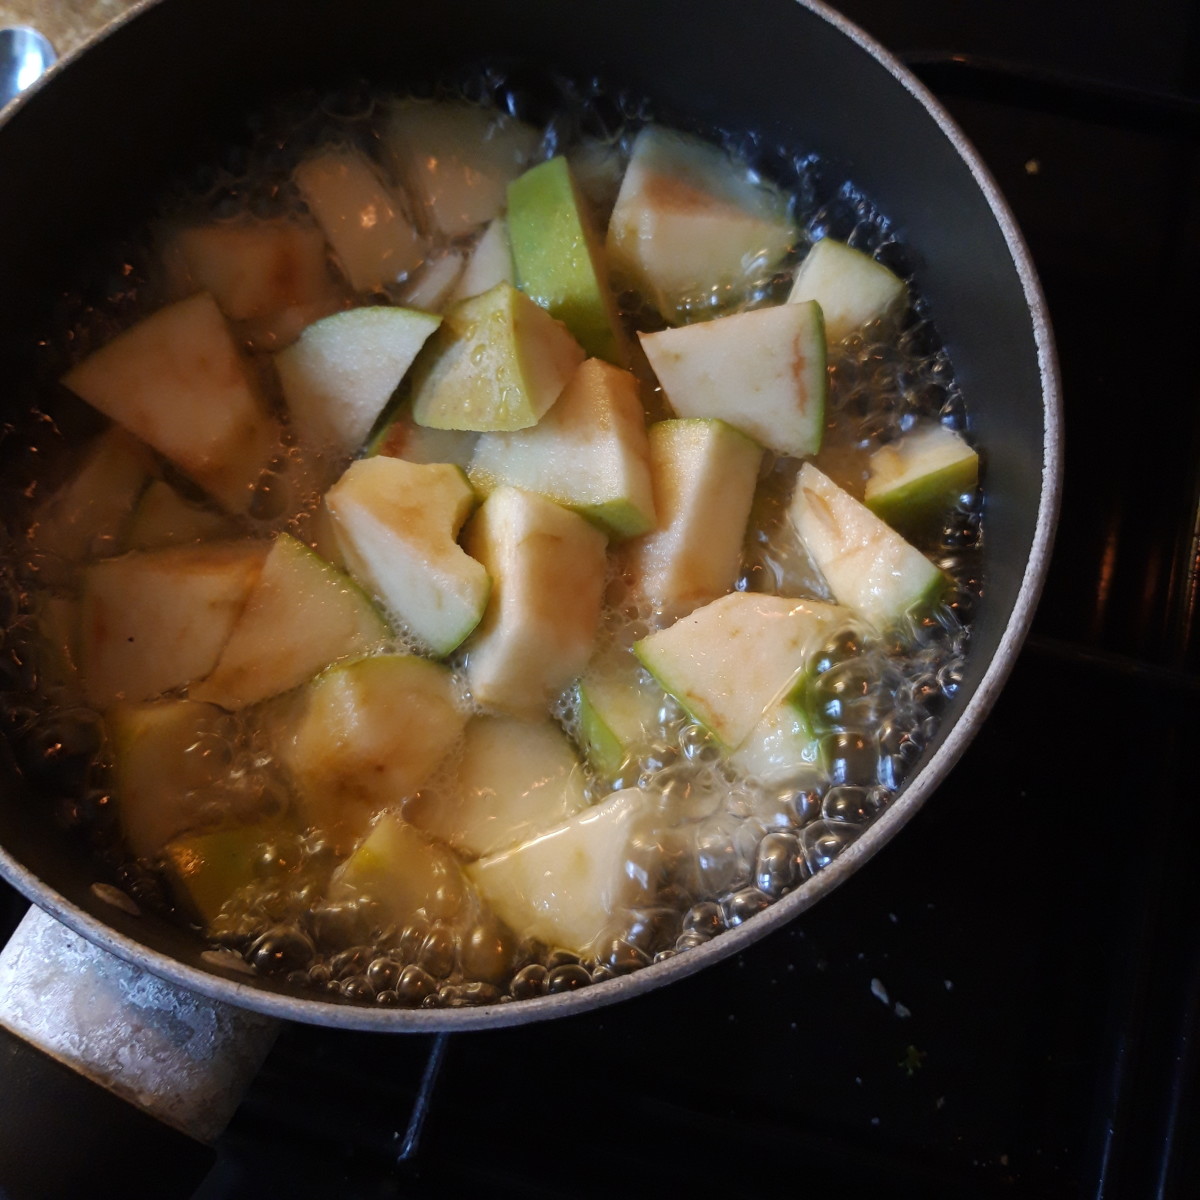 Apple chunks cooking